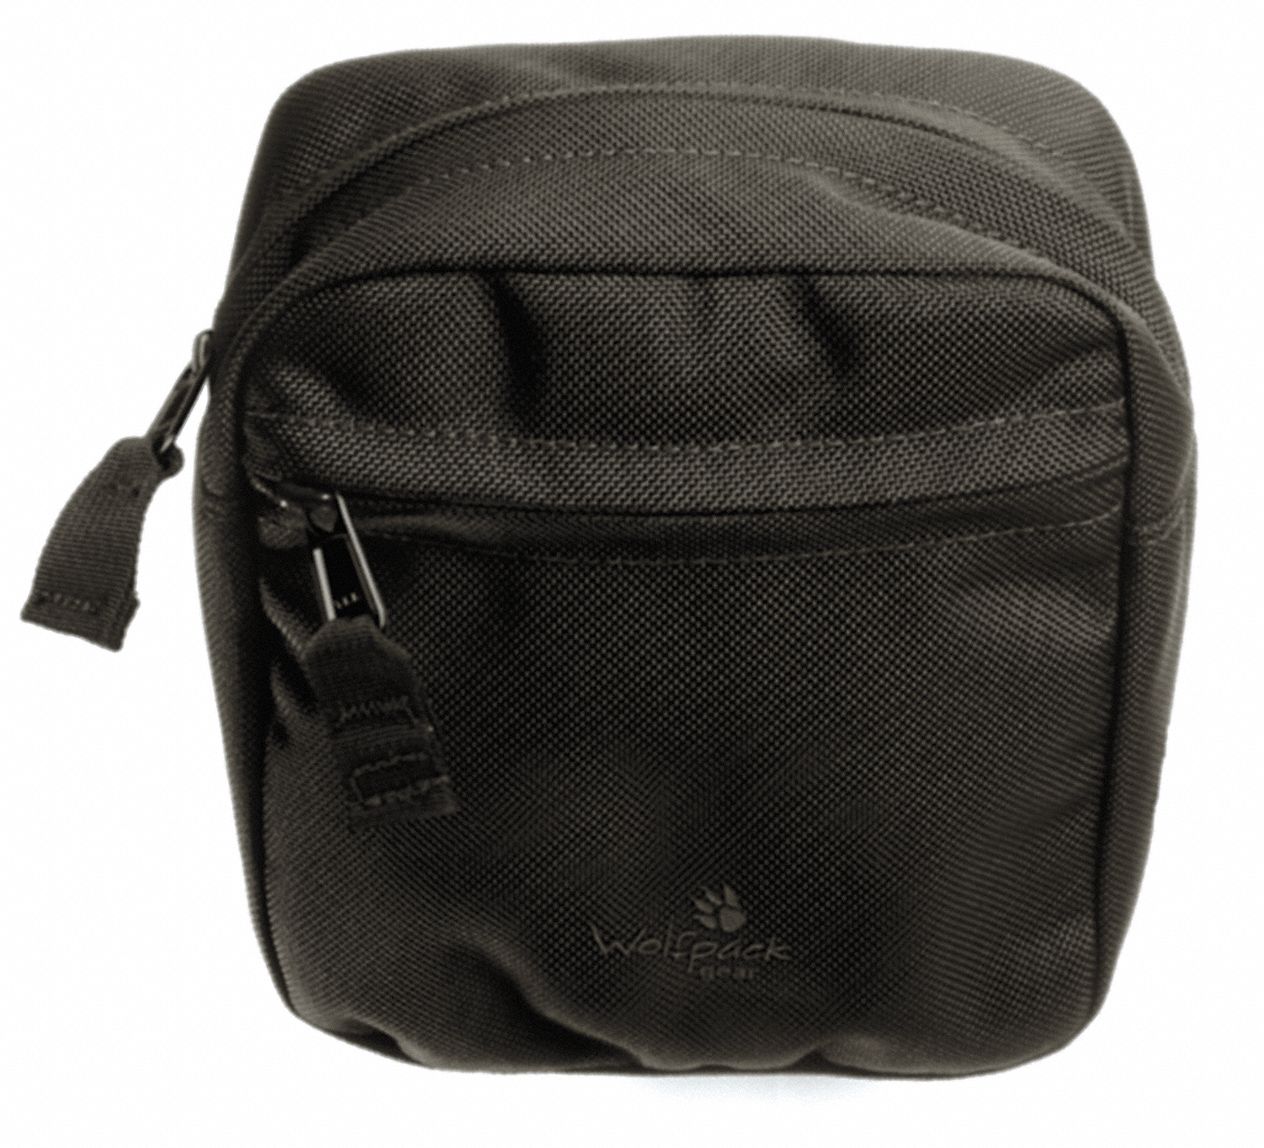 18C685 - Accessory Bag 400 cu in Ballistic Nylon